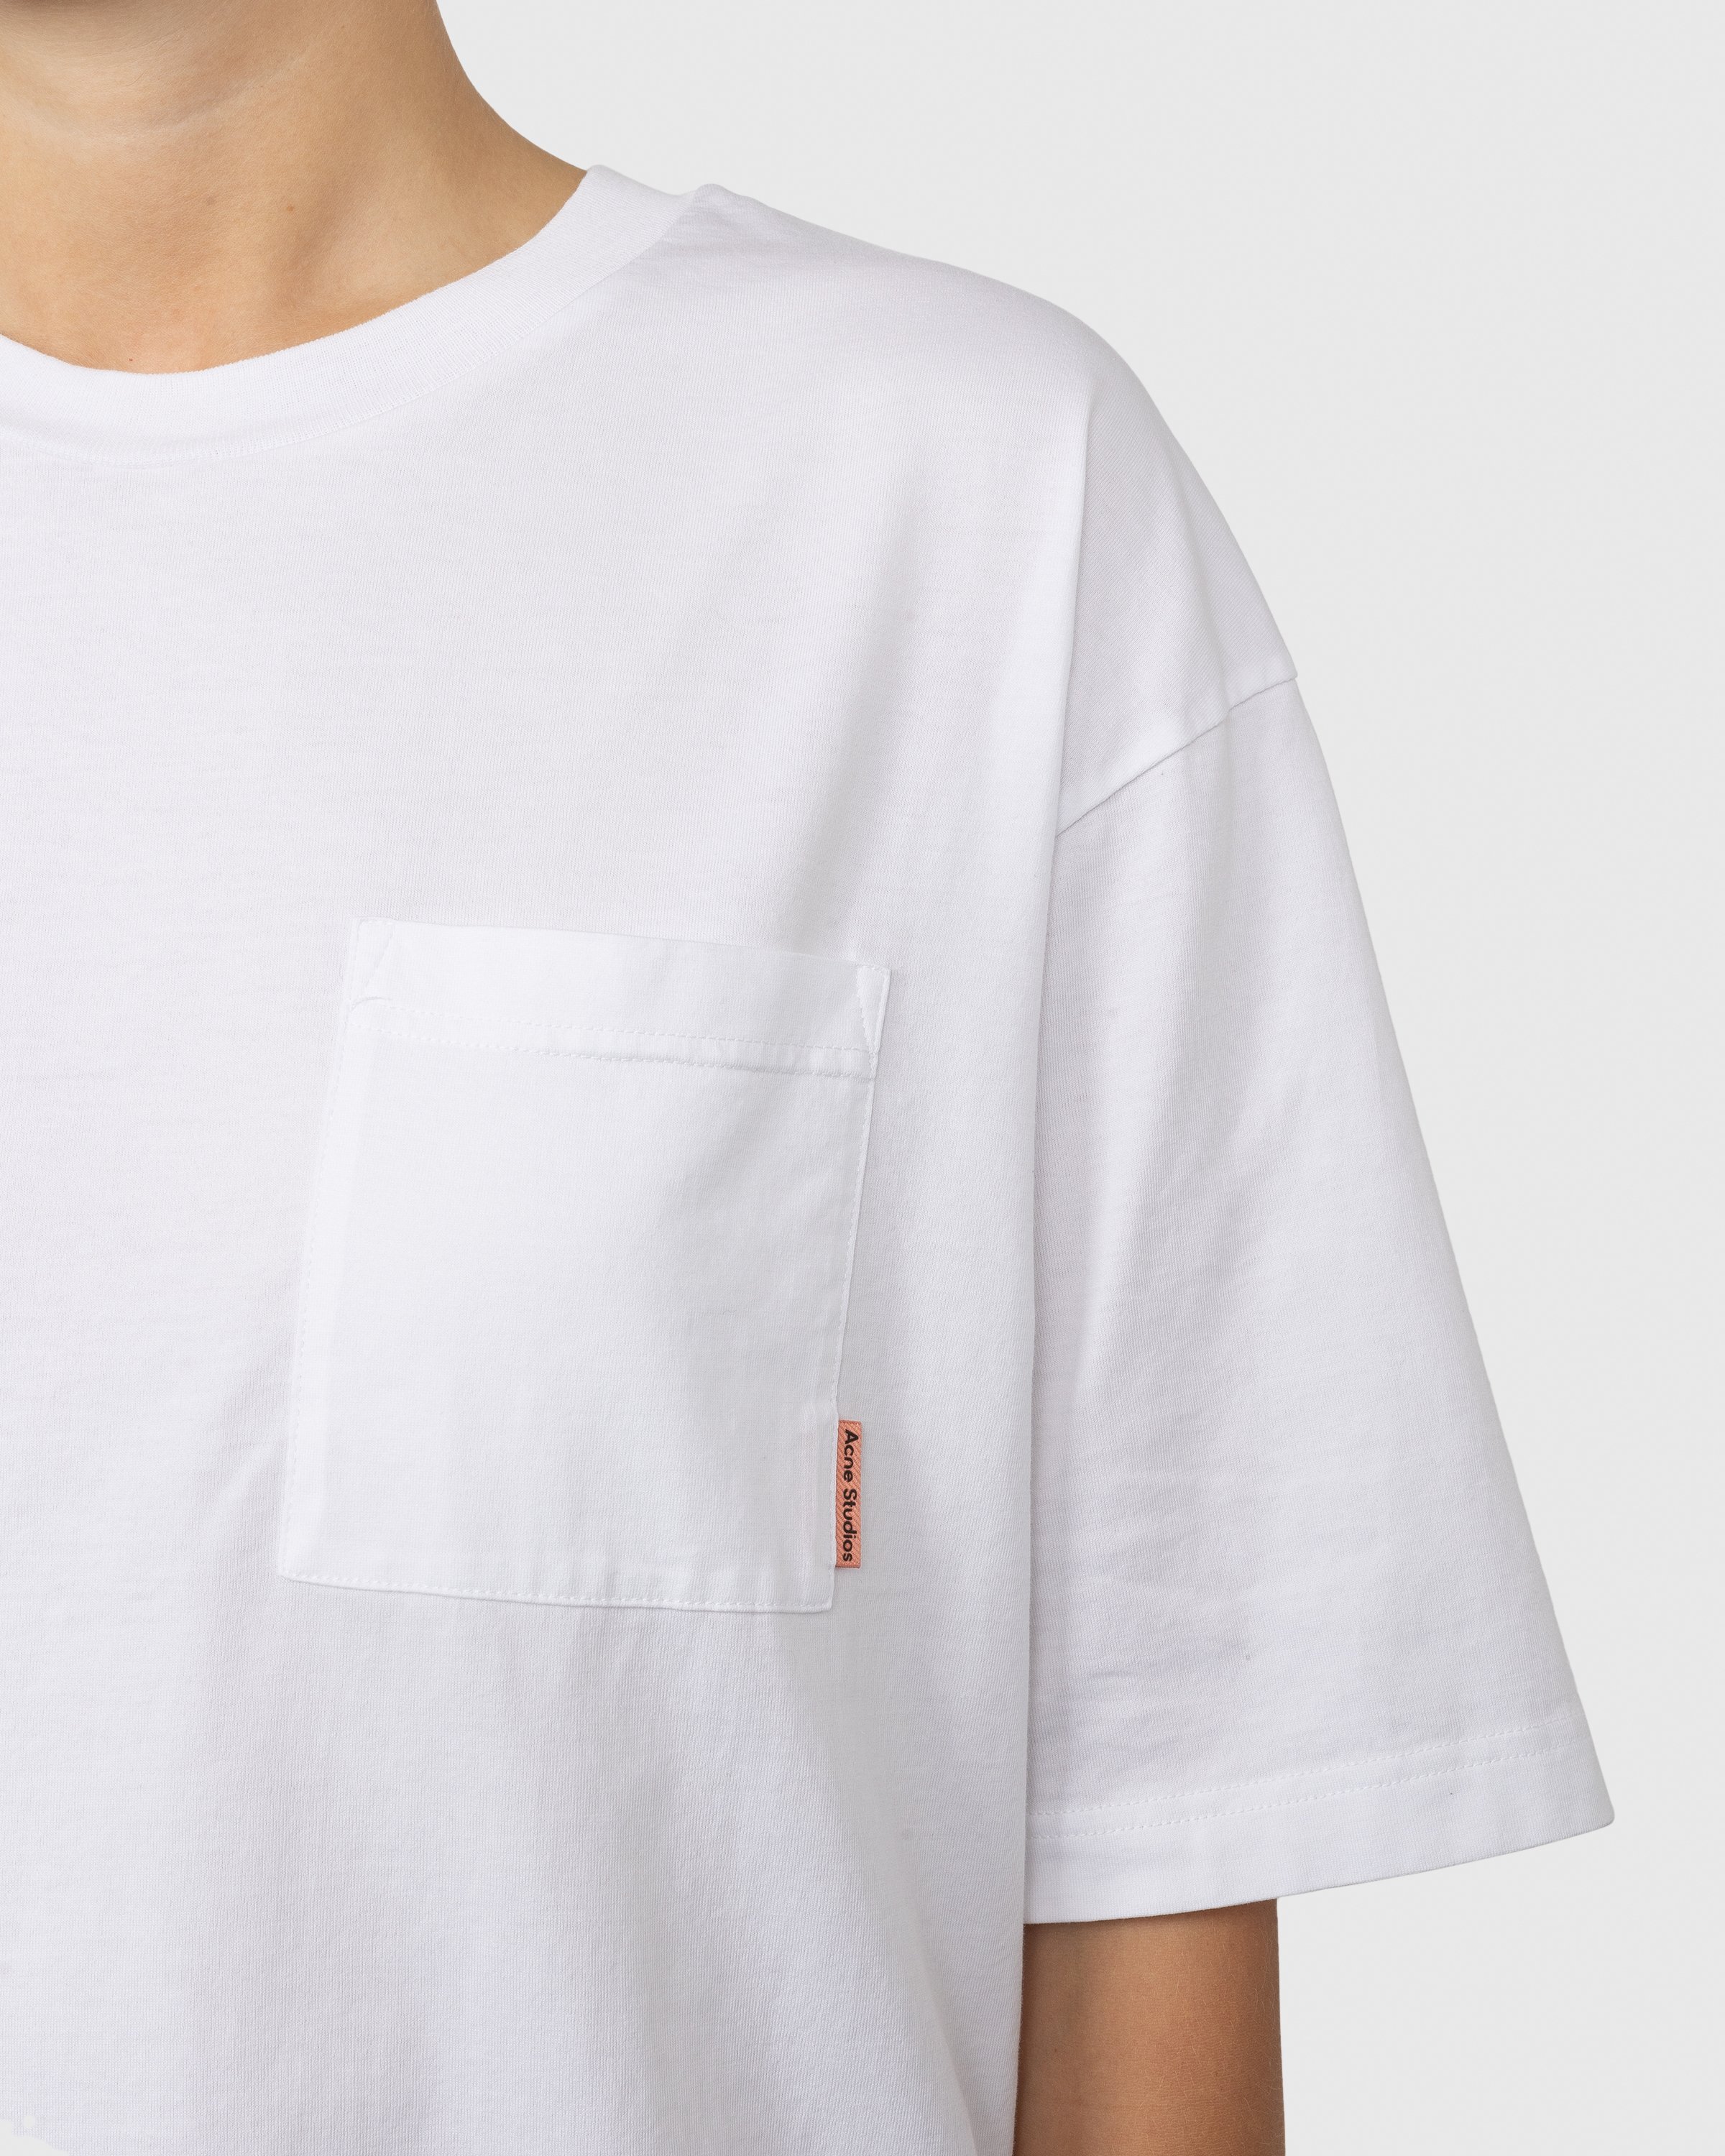 Acne Studios - Organic Cotton Pocket T-Shirt White - Clothing - White - Image 5